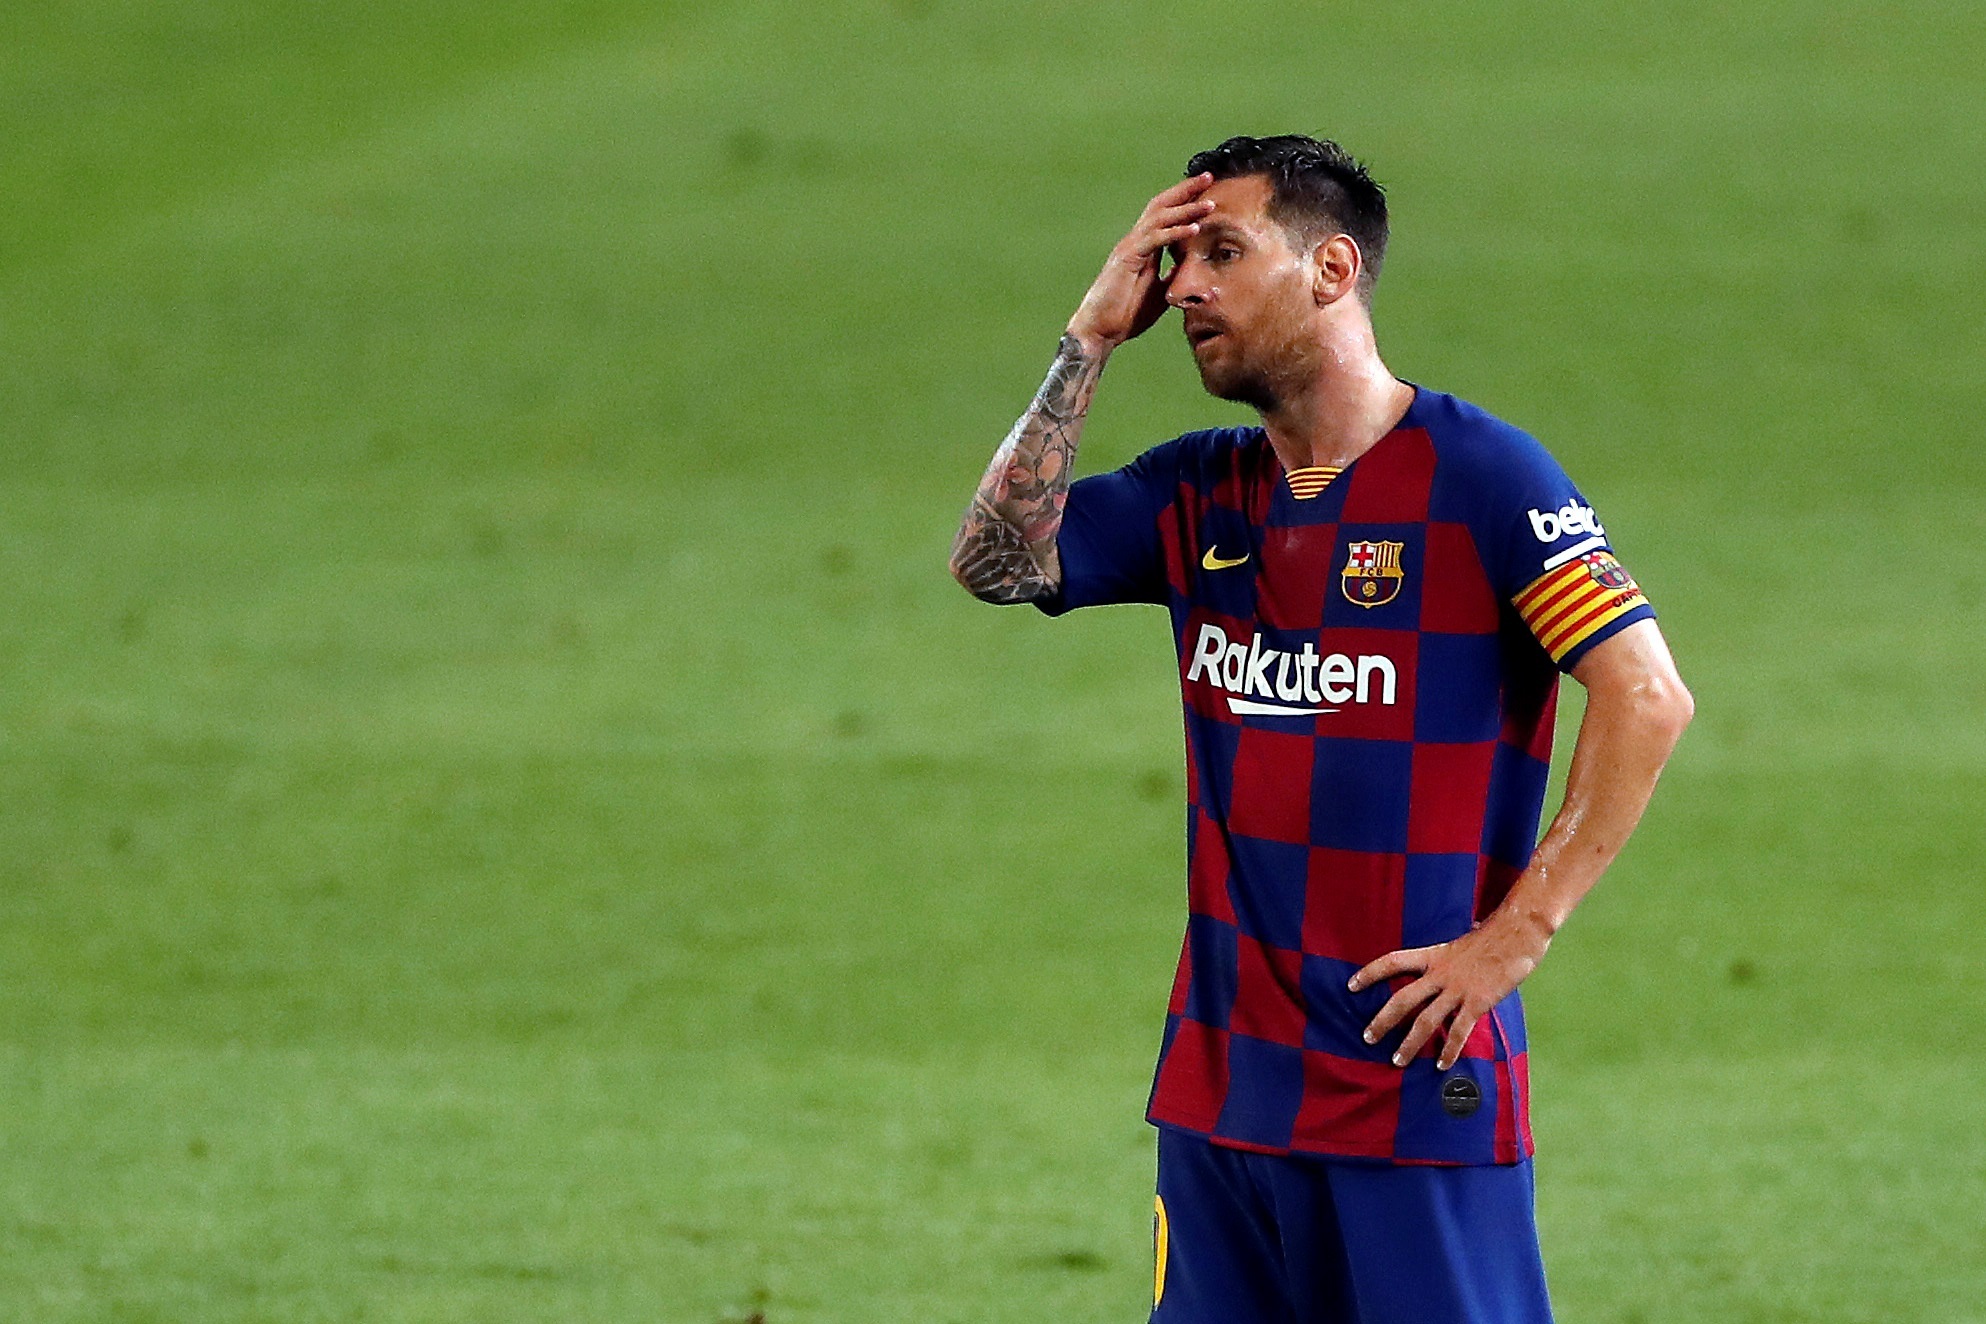 La fuerte autocrítica de Messi tras la derrota del Barcelona